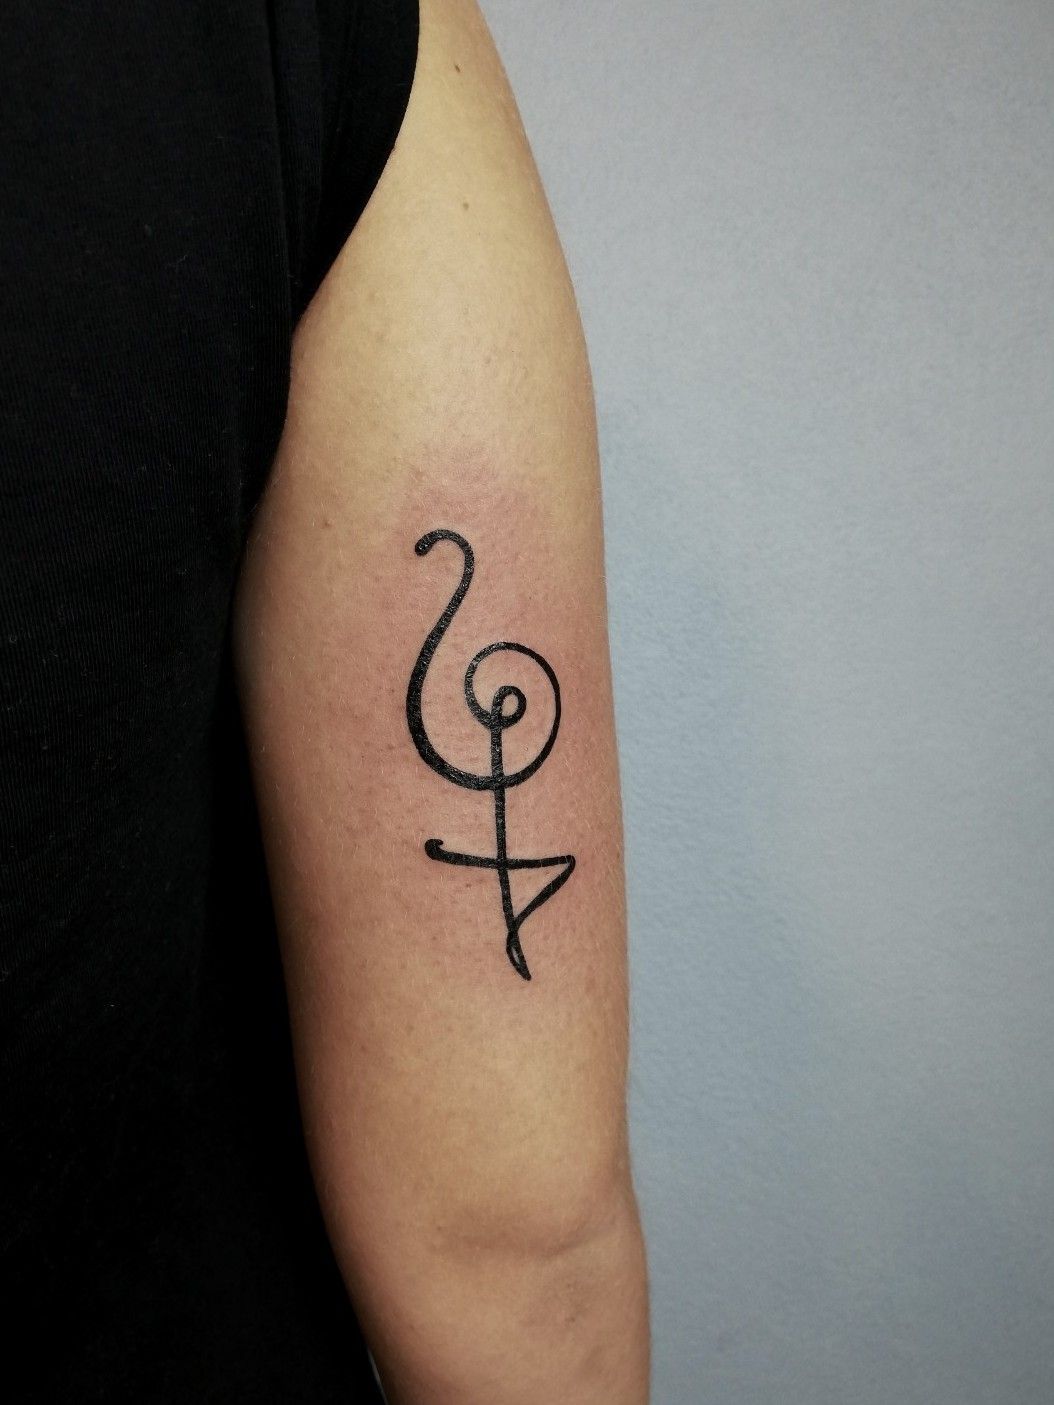 Hakuna Matata symbol tattoo located on the ankle